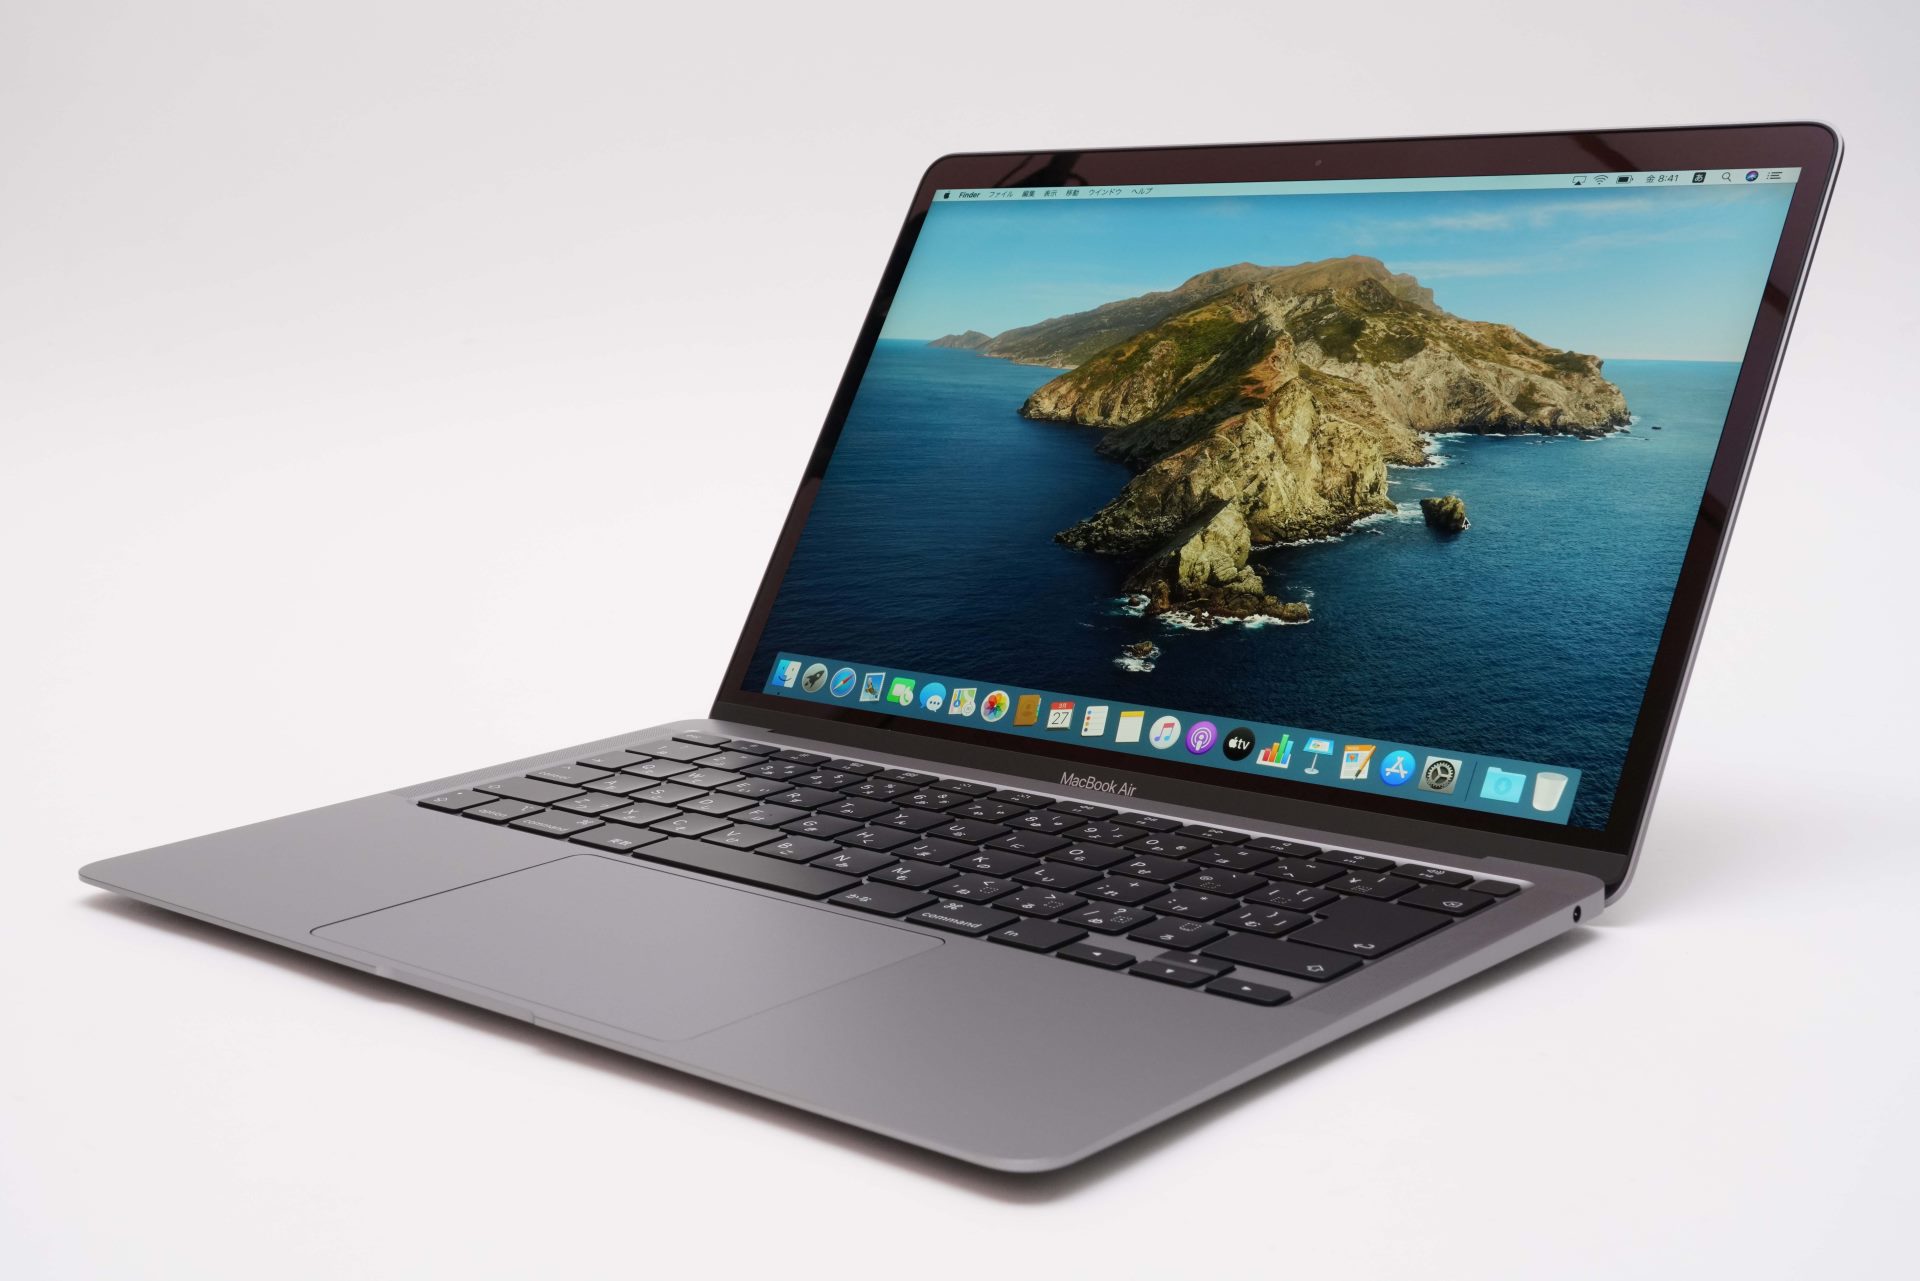 Hothotレビュー】4コアに倍増した「MacBook Air 2020」をmacOSと ...